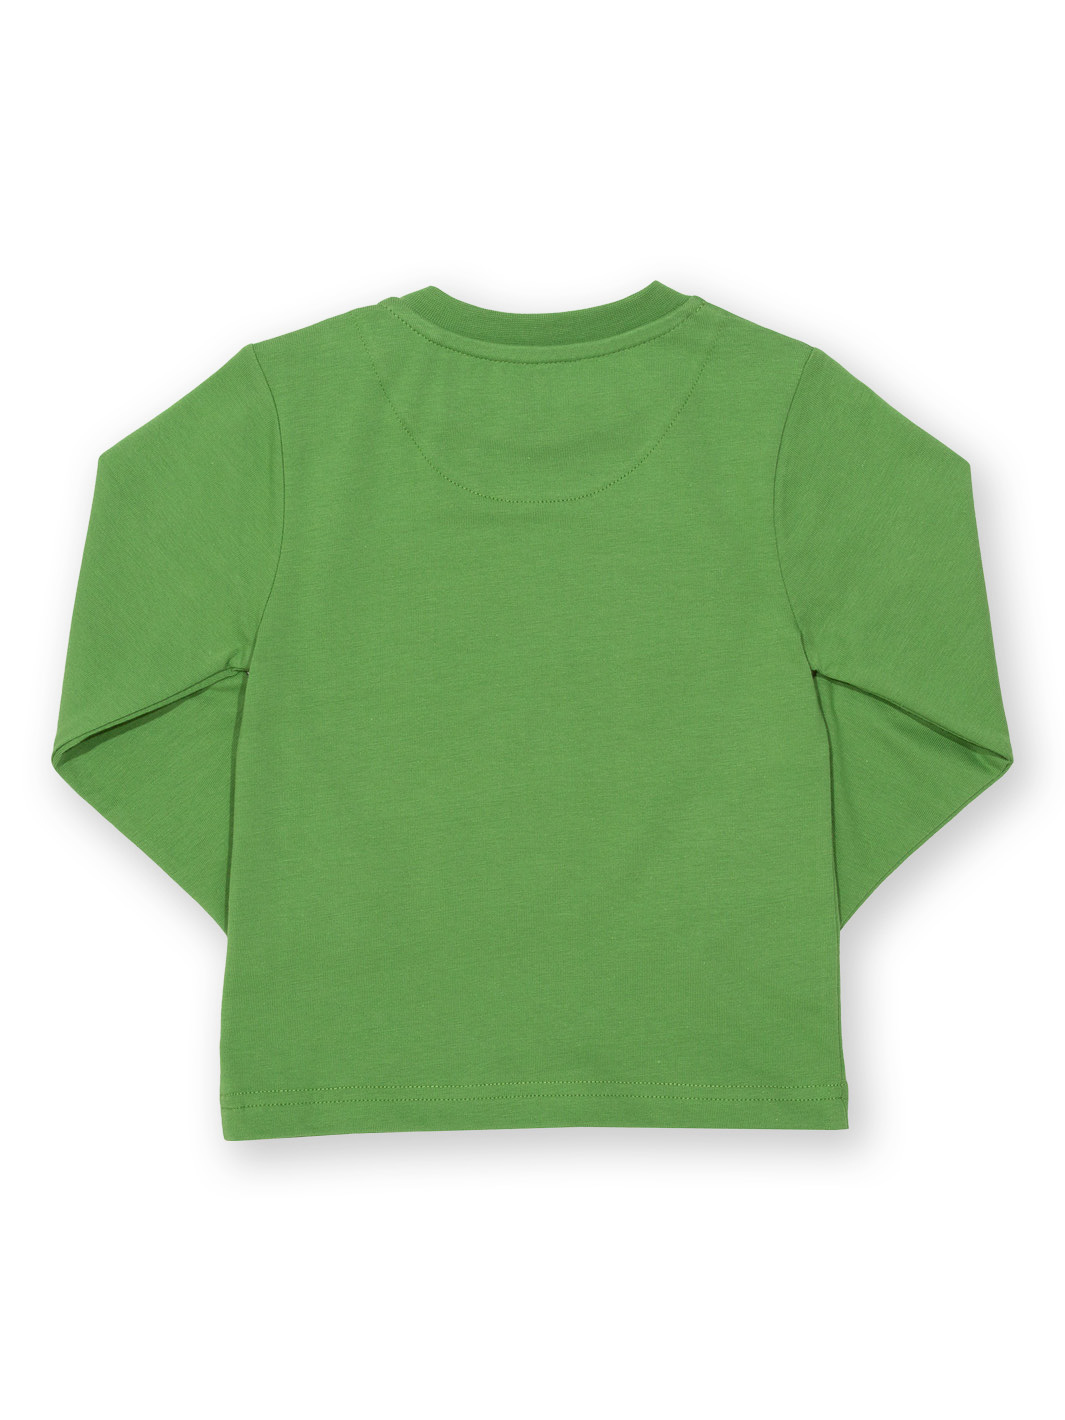 Shirt Kartoffel-Traktor grün von Kite Clothing